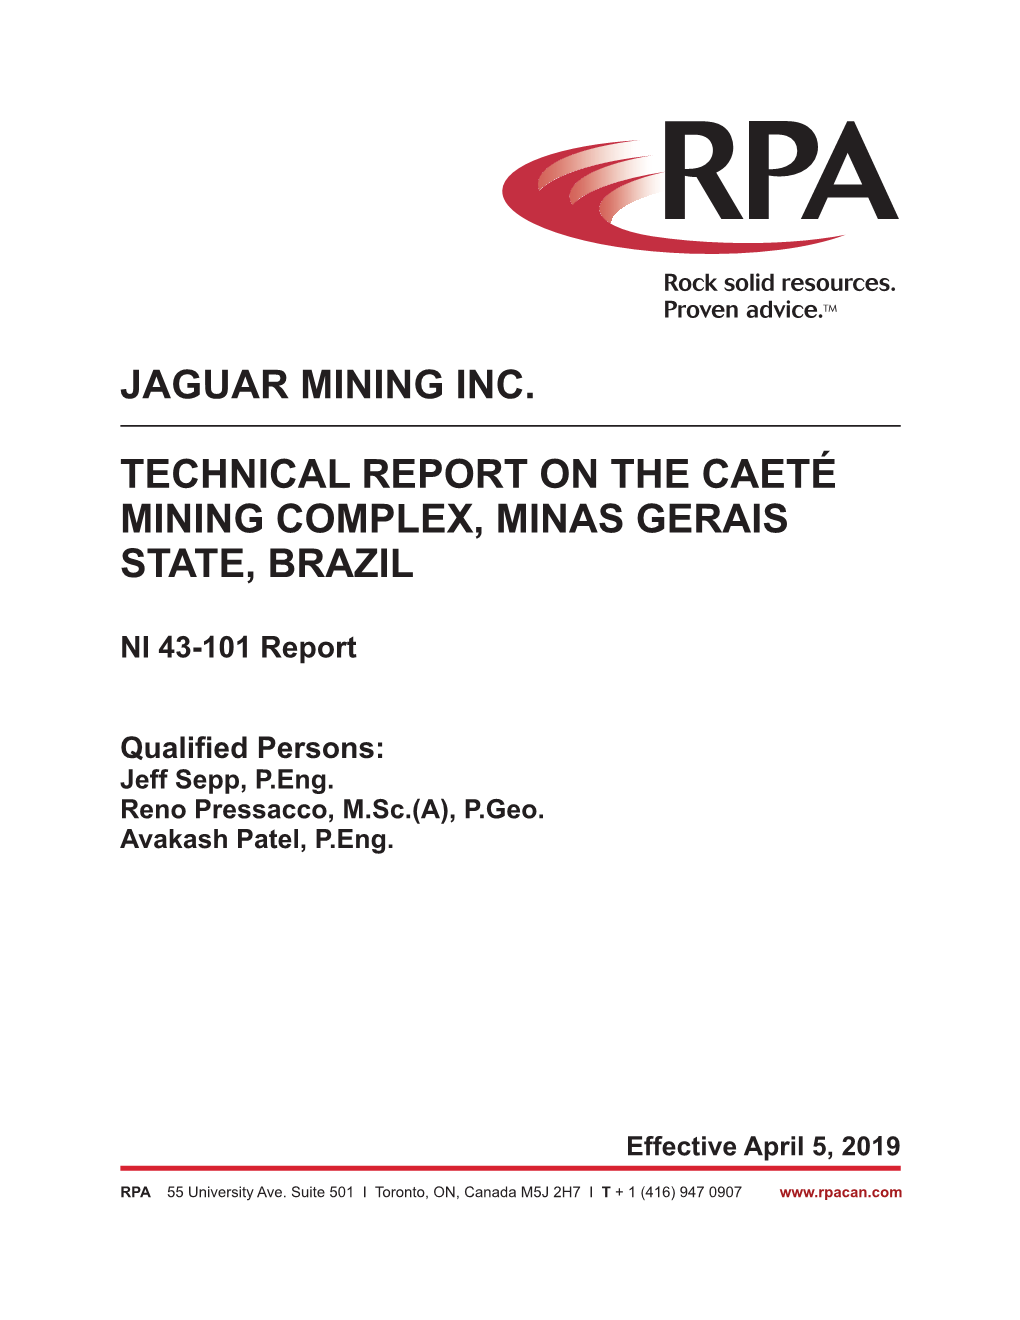 Jaguar Mining Inc. Technical Report on the Caeté Mining Complex, Minas Gerais State, Brazil